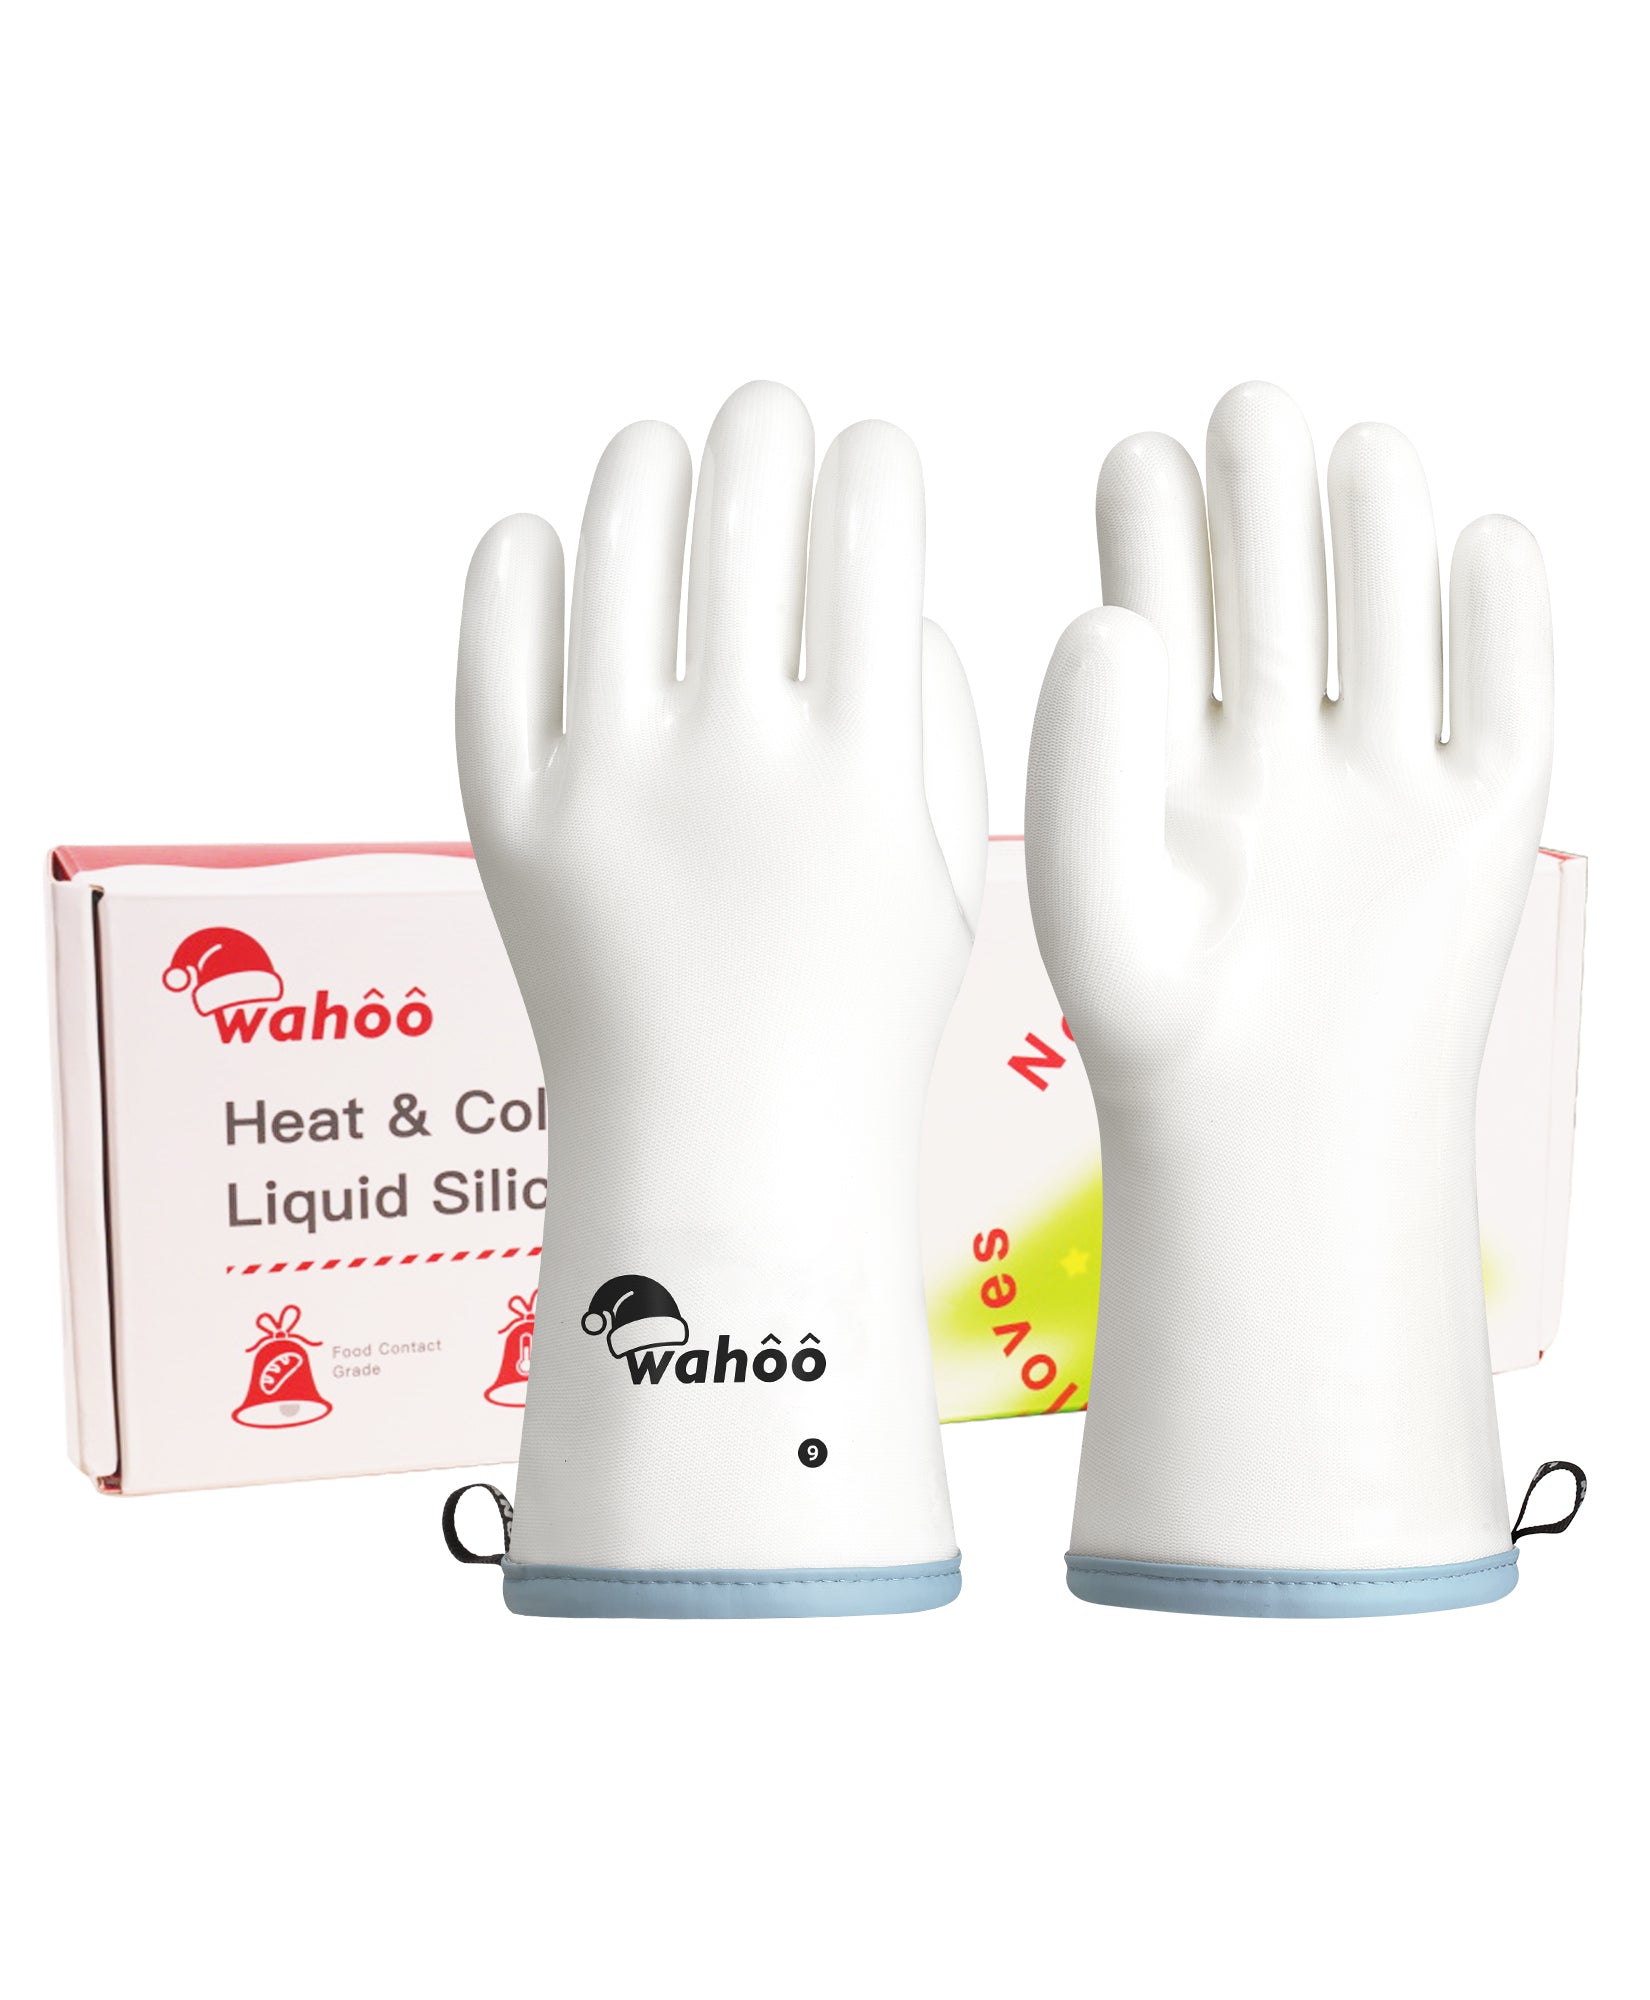 wahoo Liquid Silicone Gloves | Christmas limted edition